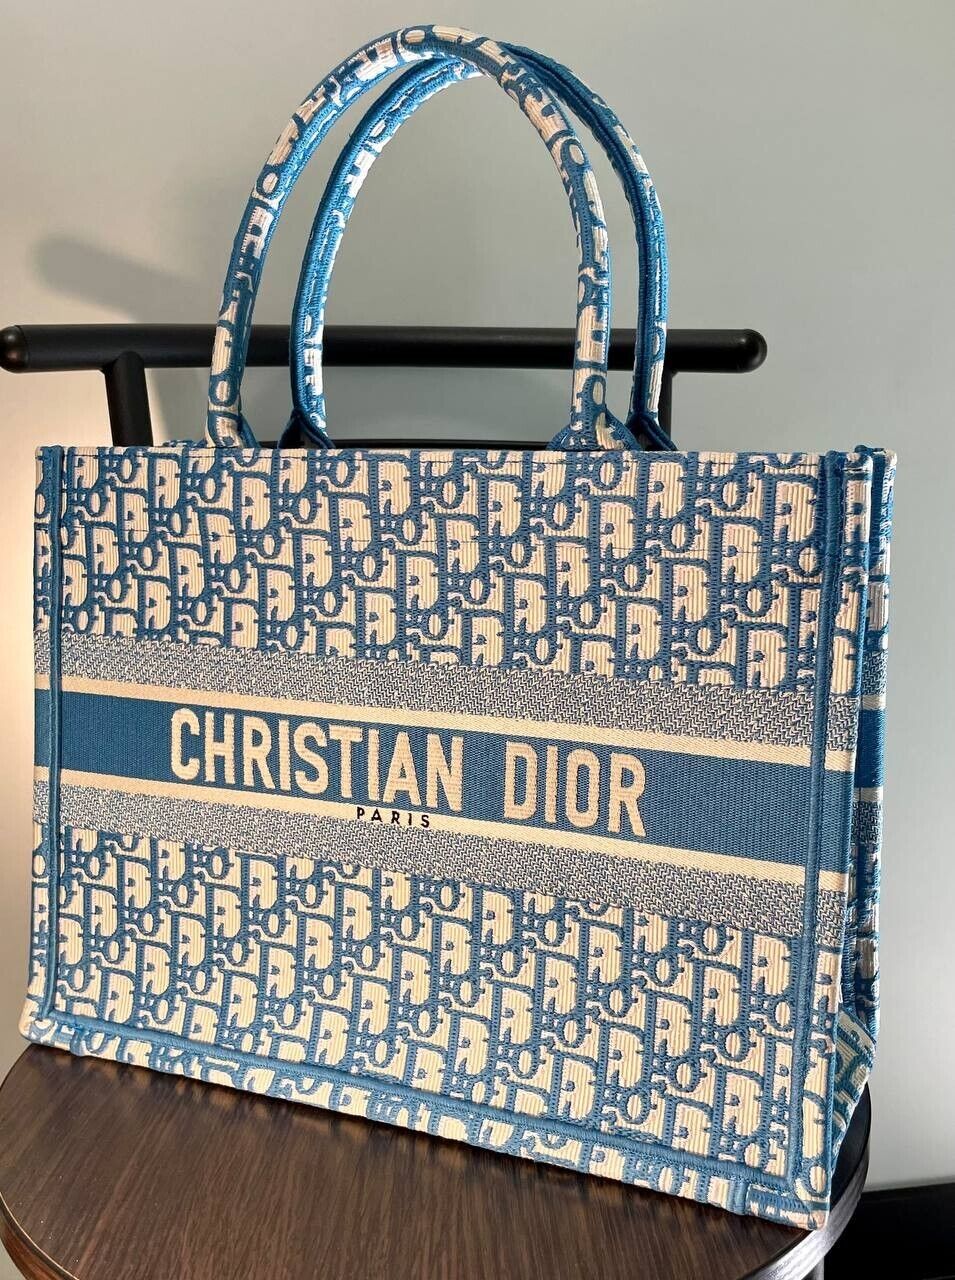 Christian Dior Book Small Tote Bag Navy - Allu USA